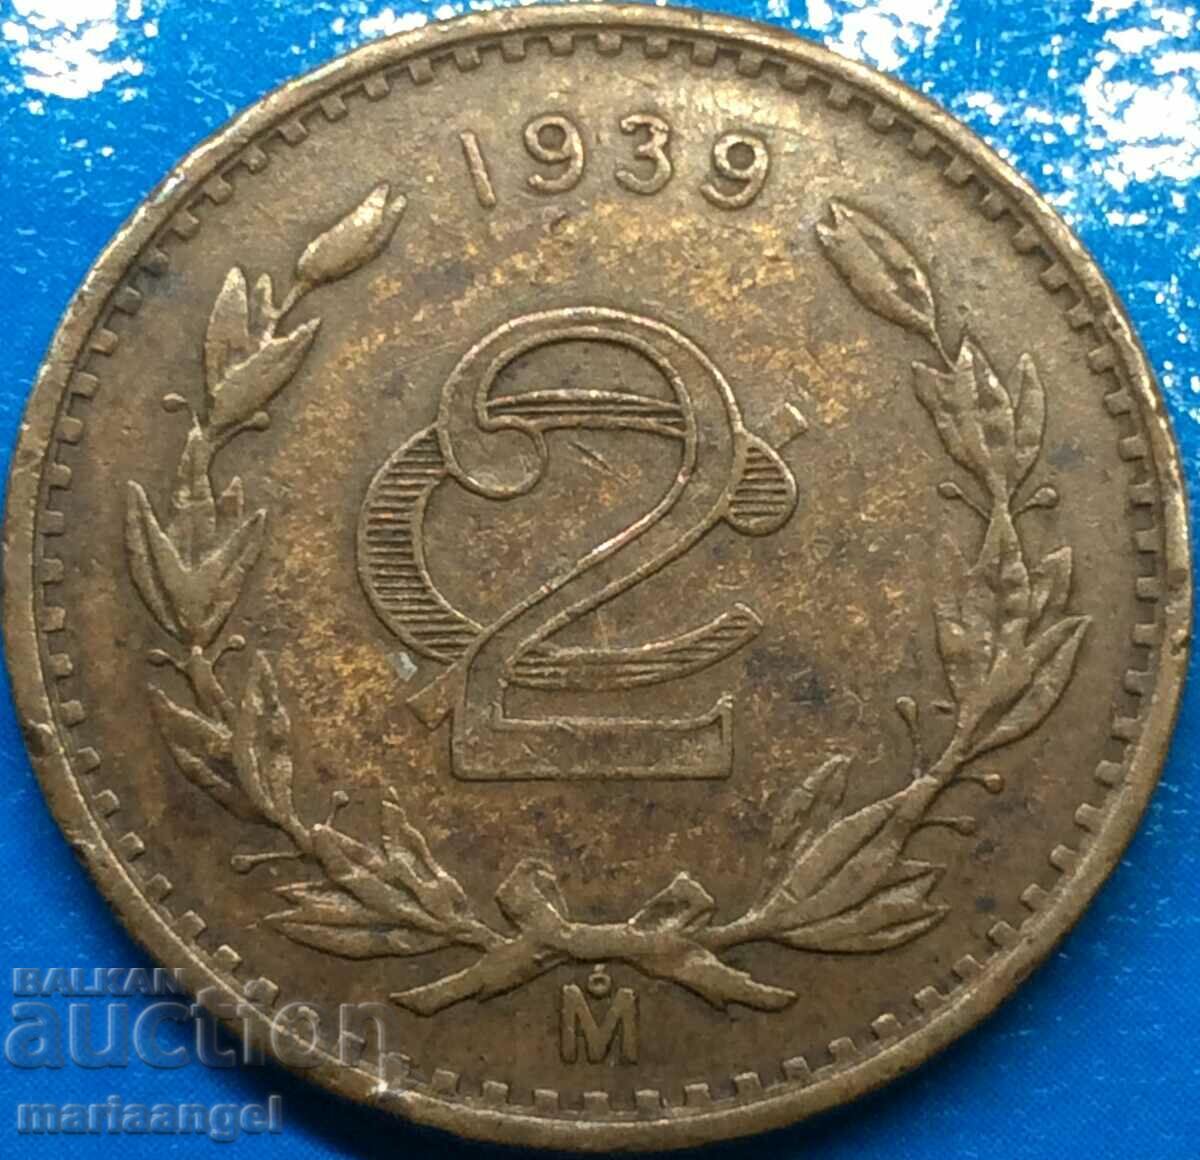 Mexic 1939 2 centavos bronz